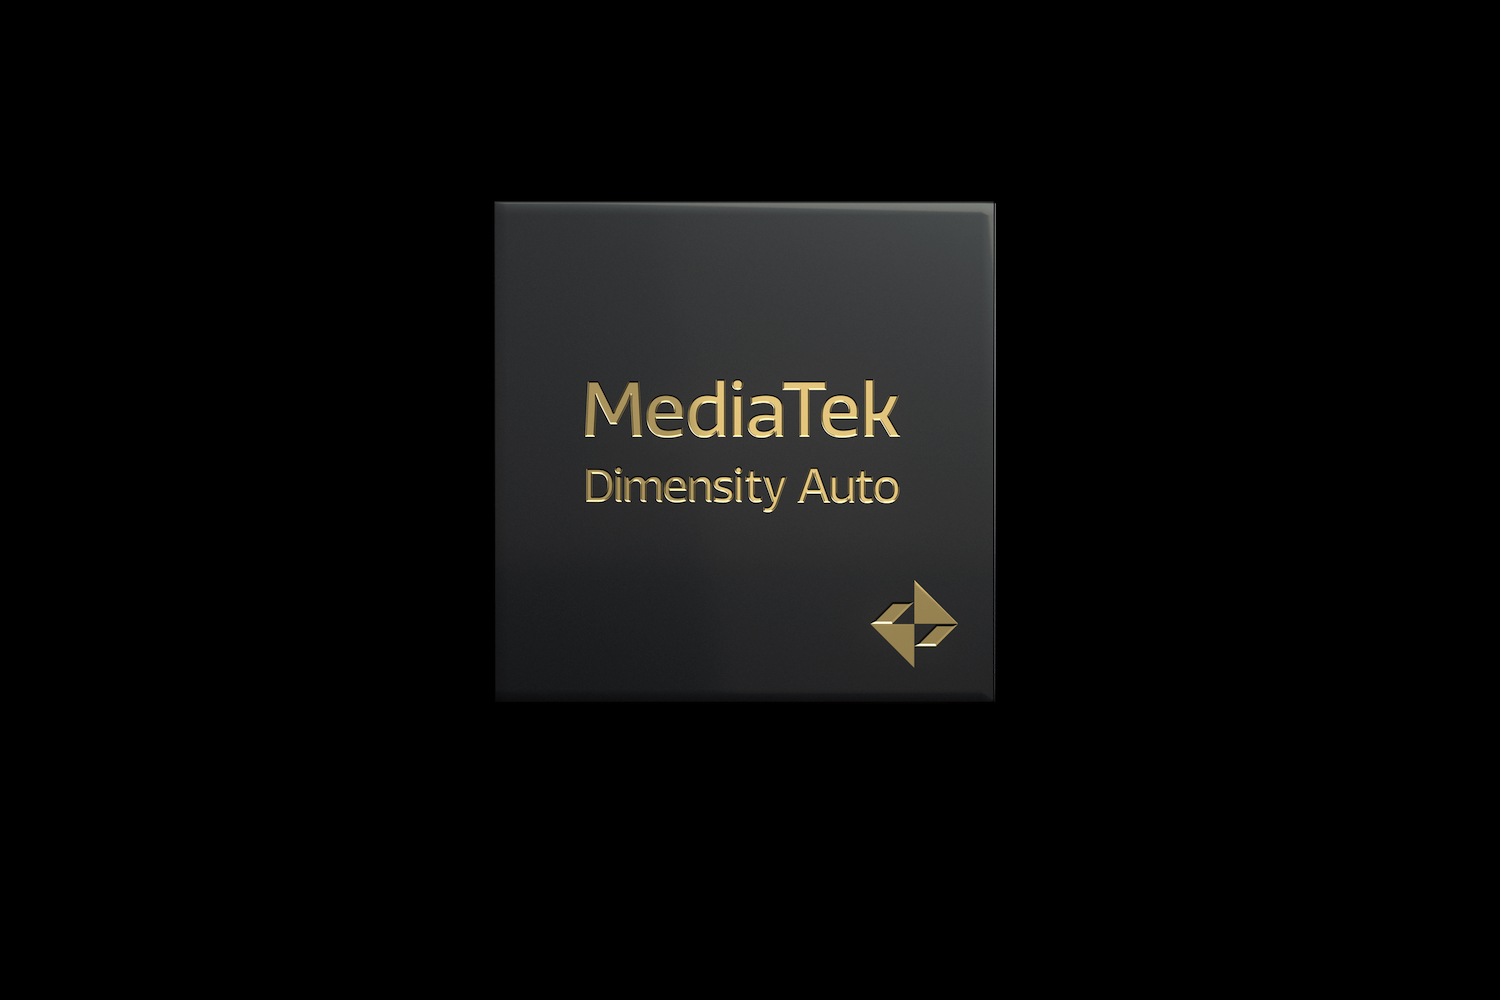 A mockup of the MediaTek Dimensity Auto chipset.